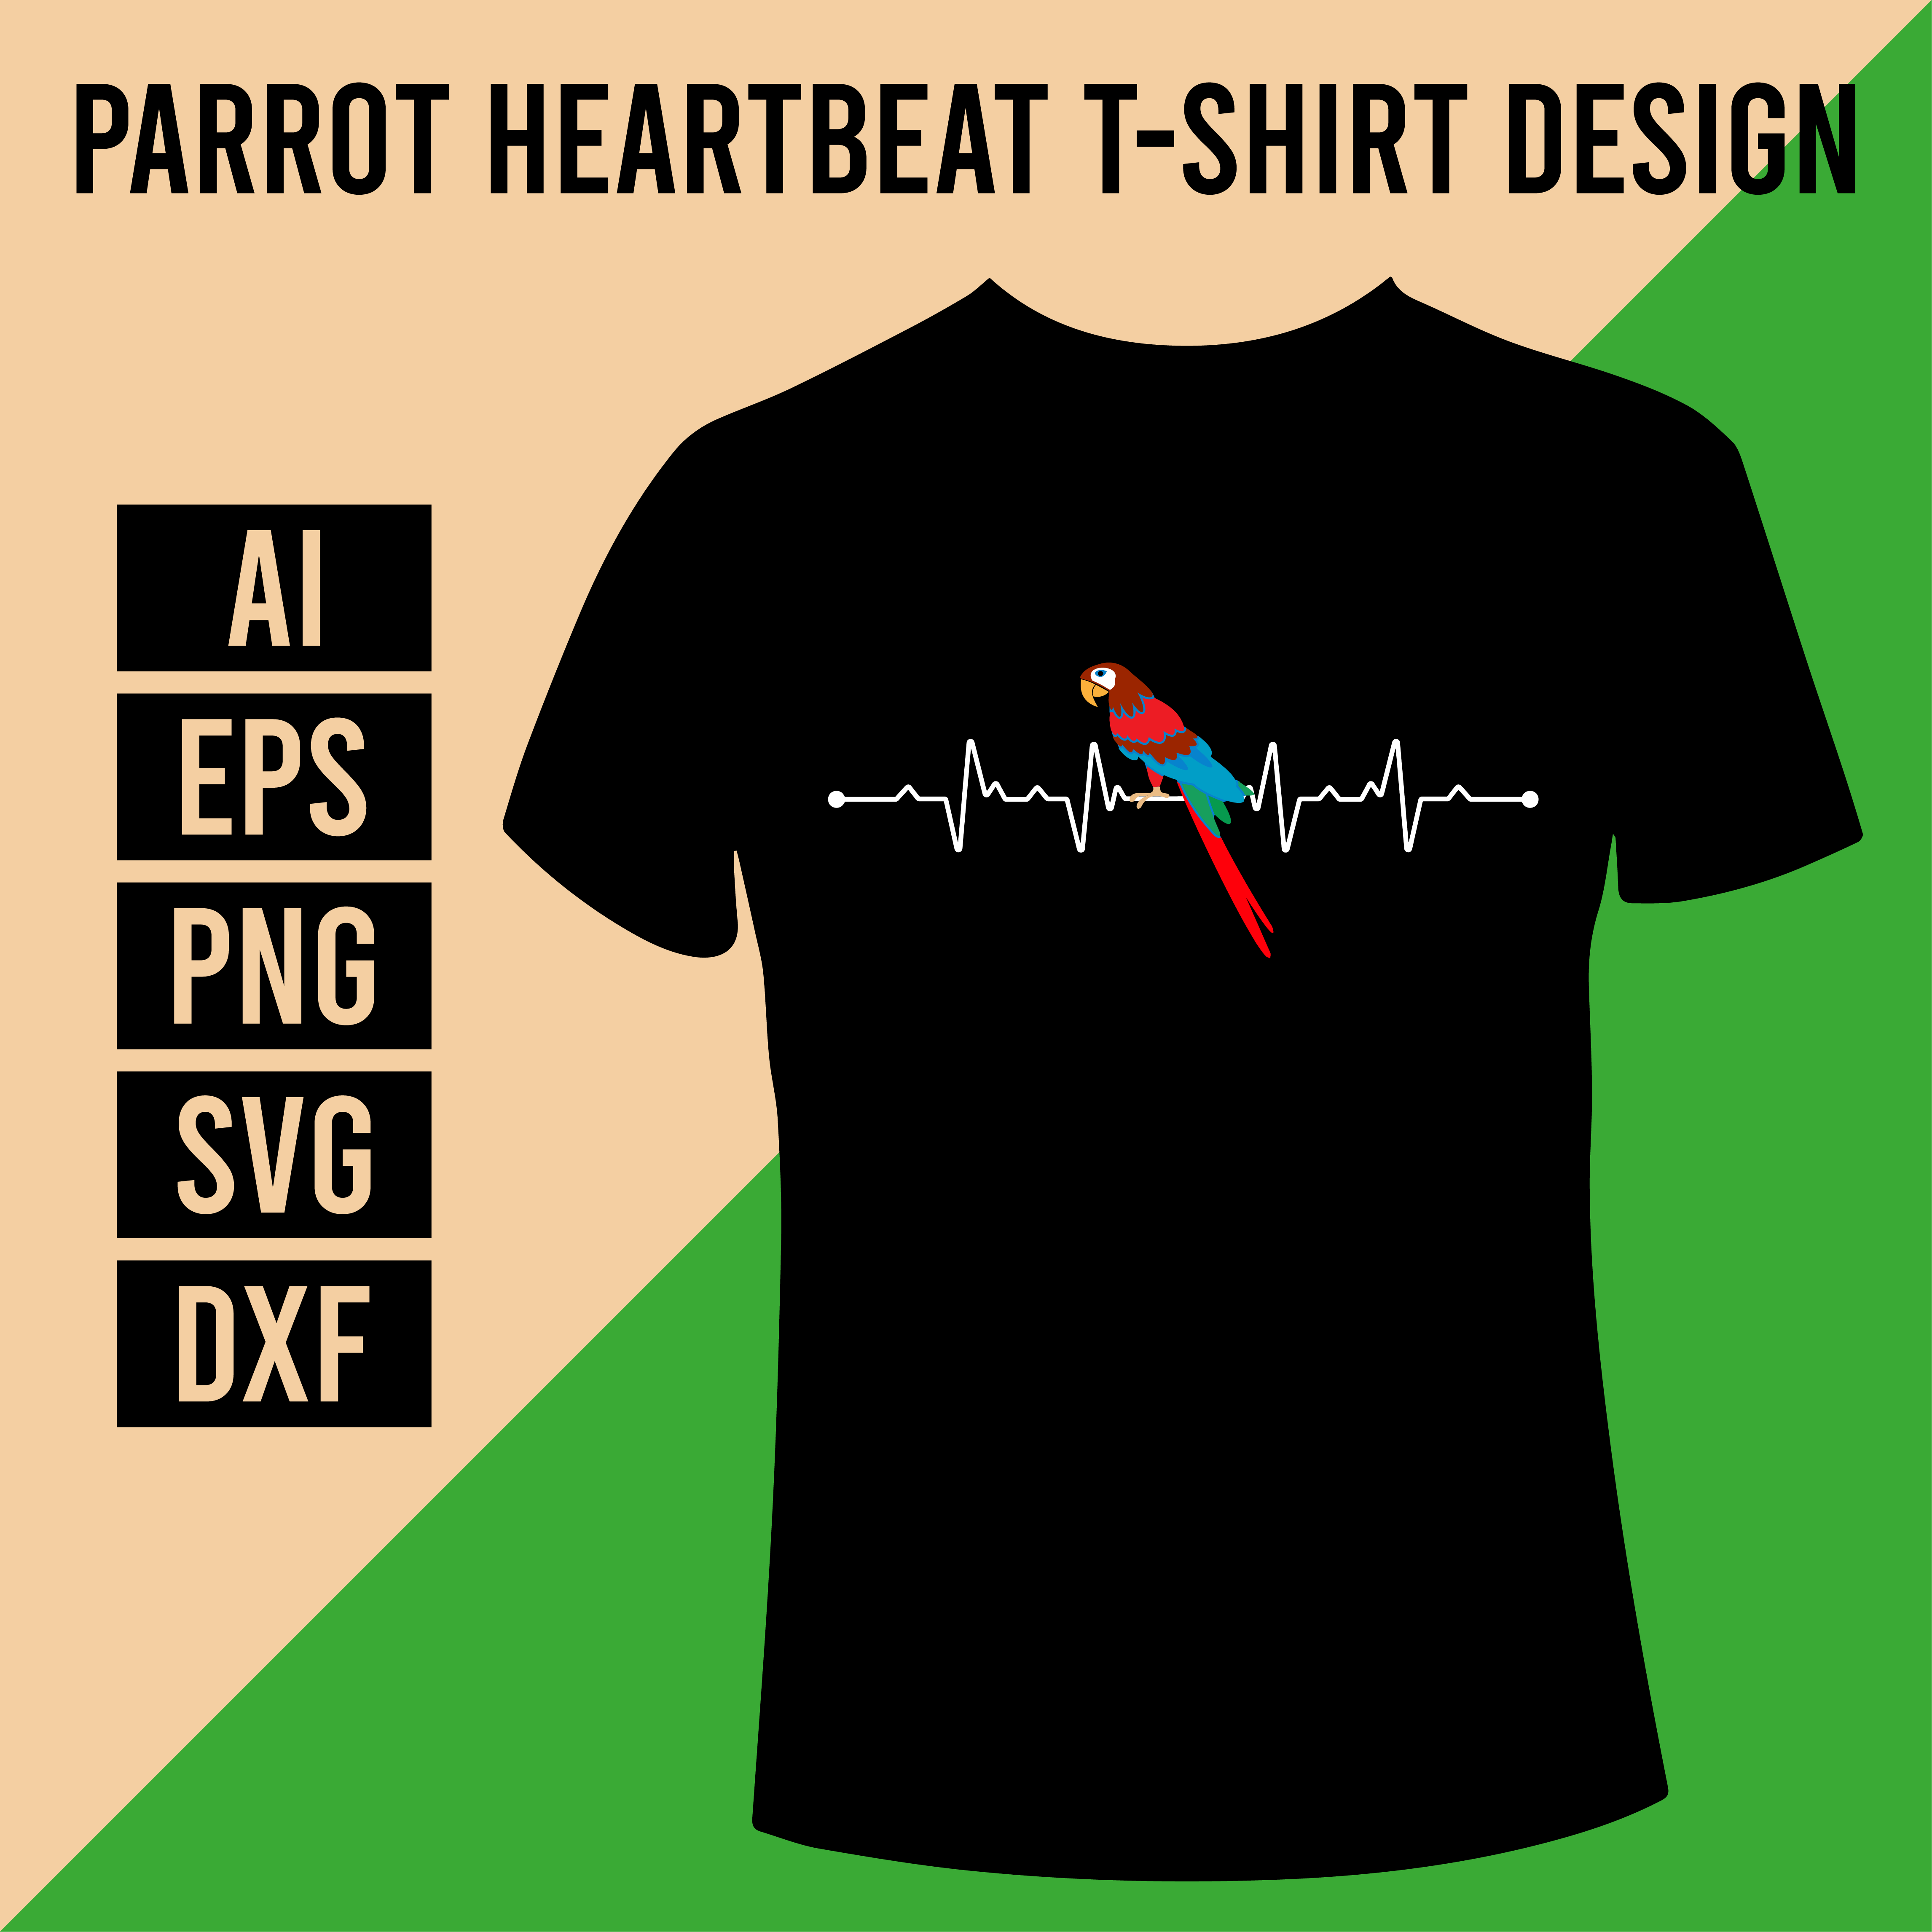 Parrot Heartbeat T-Shirt Design cover image.